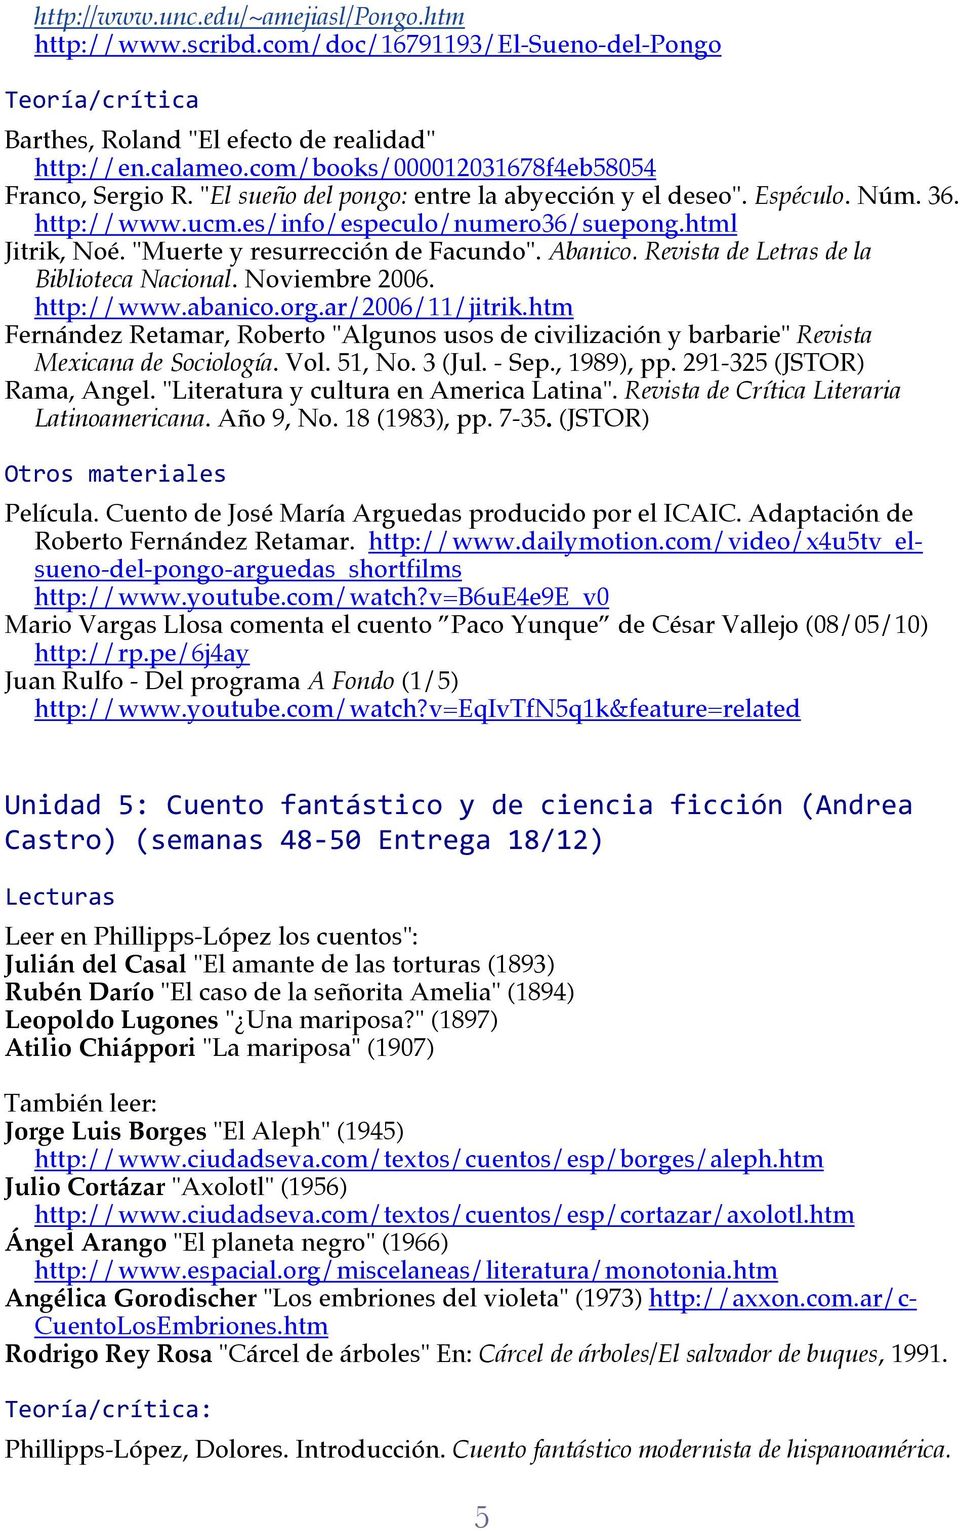 Revista de Letras de la Biblioteca Nacional. Noviembre 2006. http://www.abanico.org.ar/2006/11/jitrik.